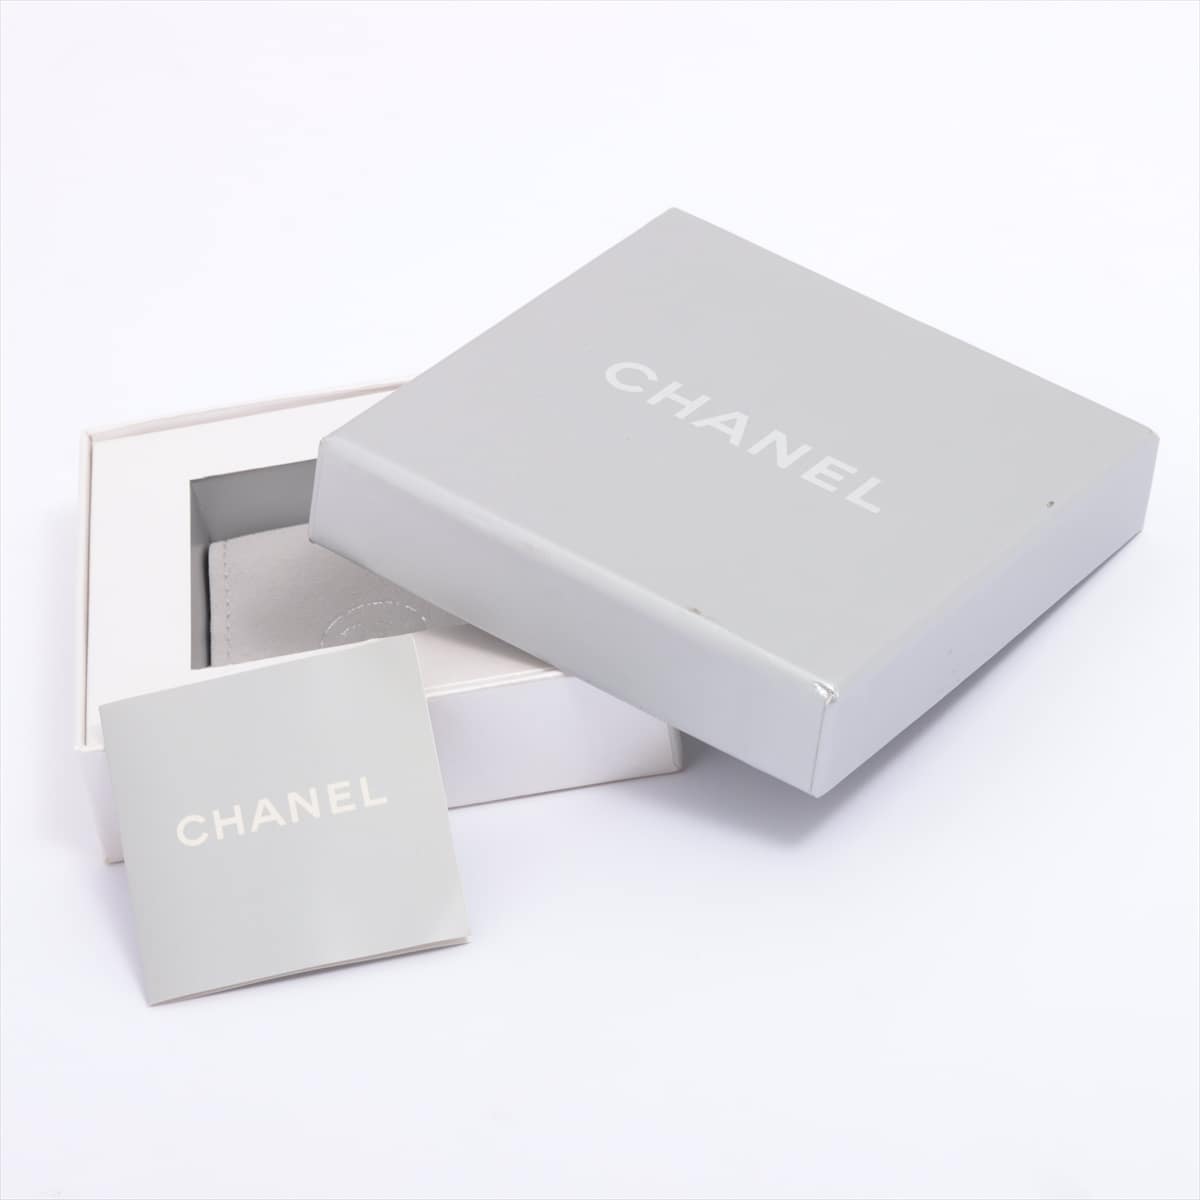 Chanel Logo rings 925 17.6g Silver